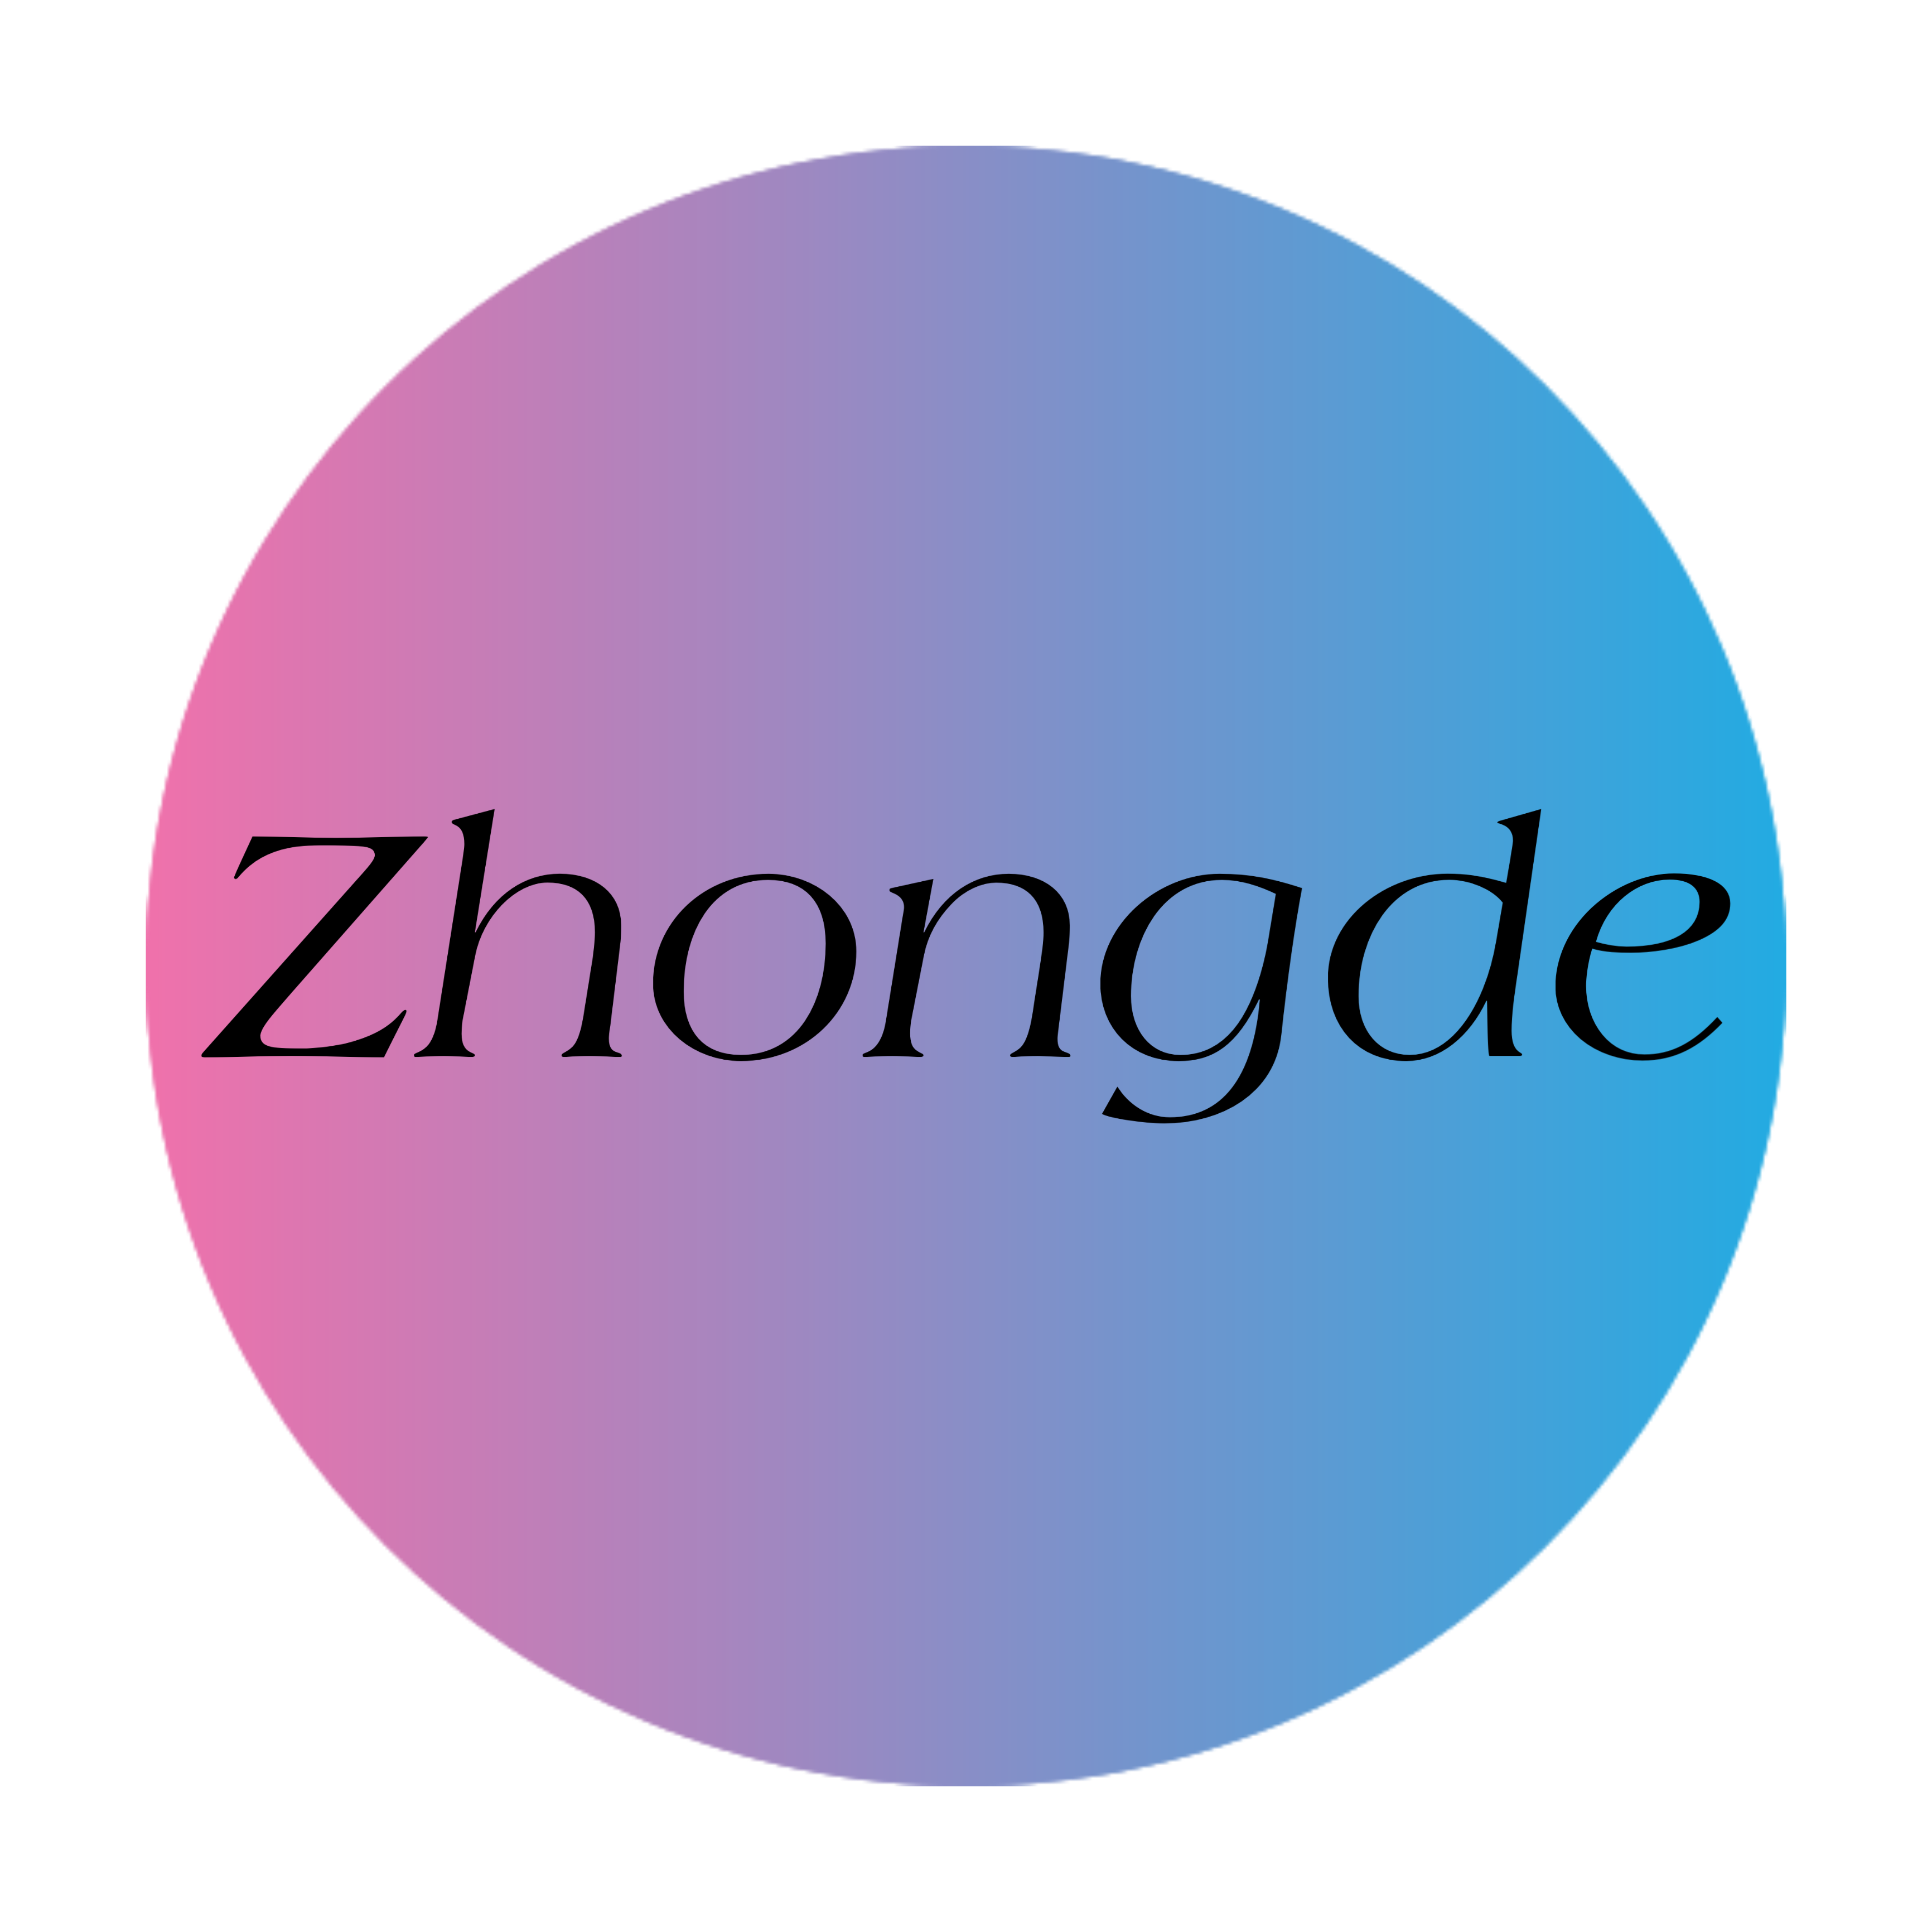 Zhongde